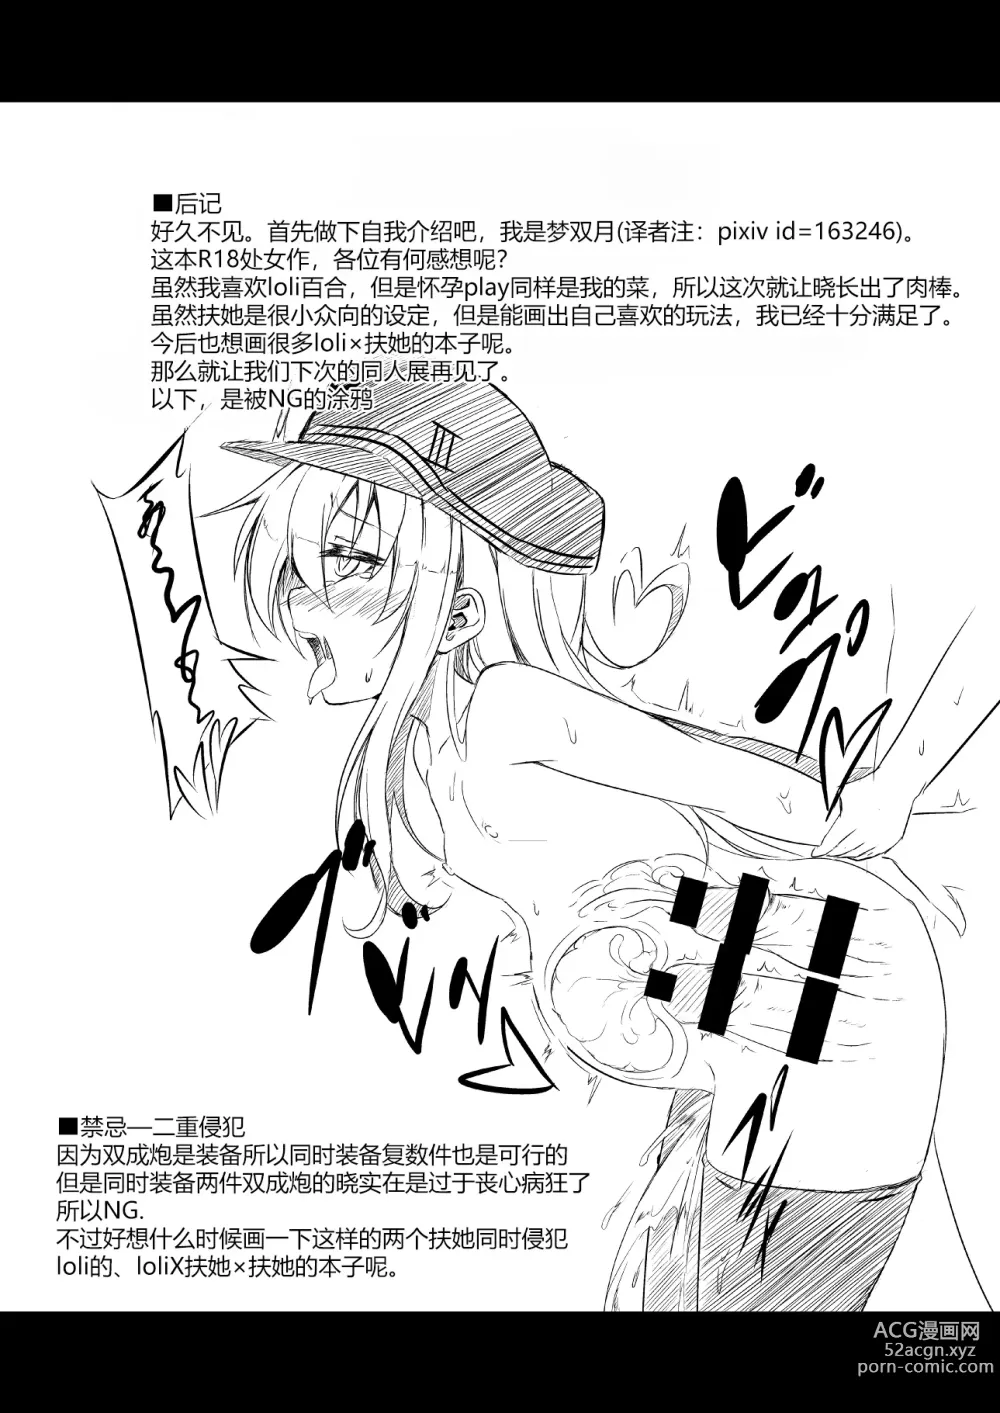 Page 25 of doujinshi Loli & Futa Vol. 1